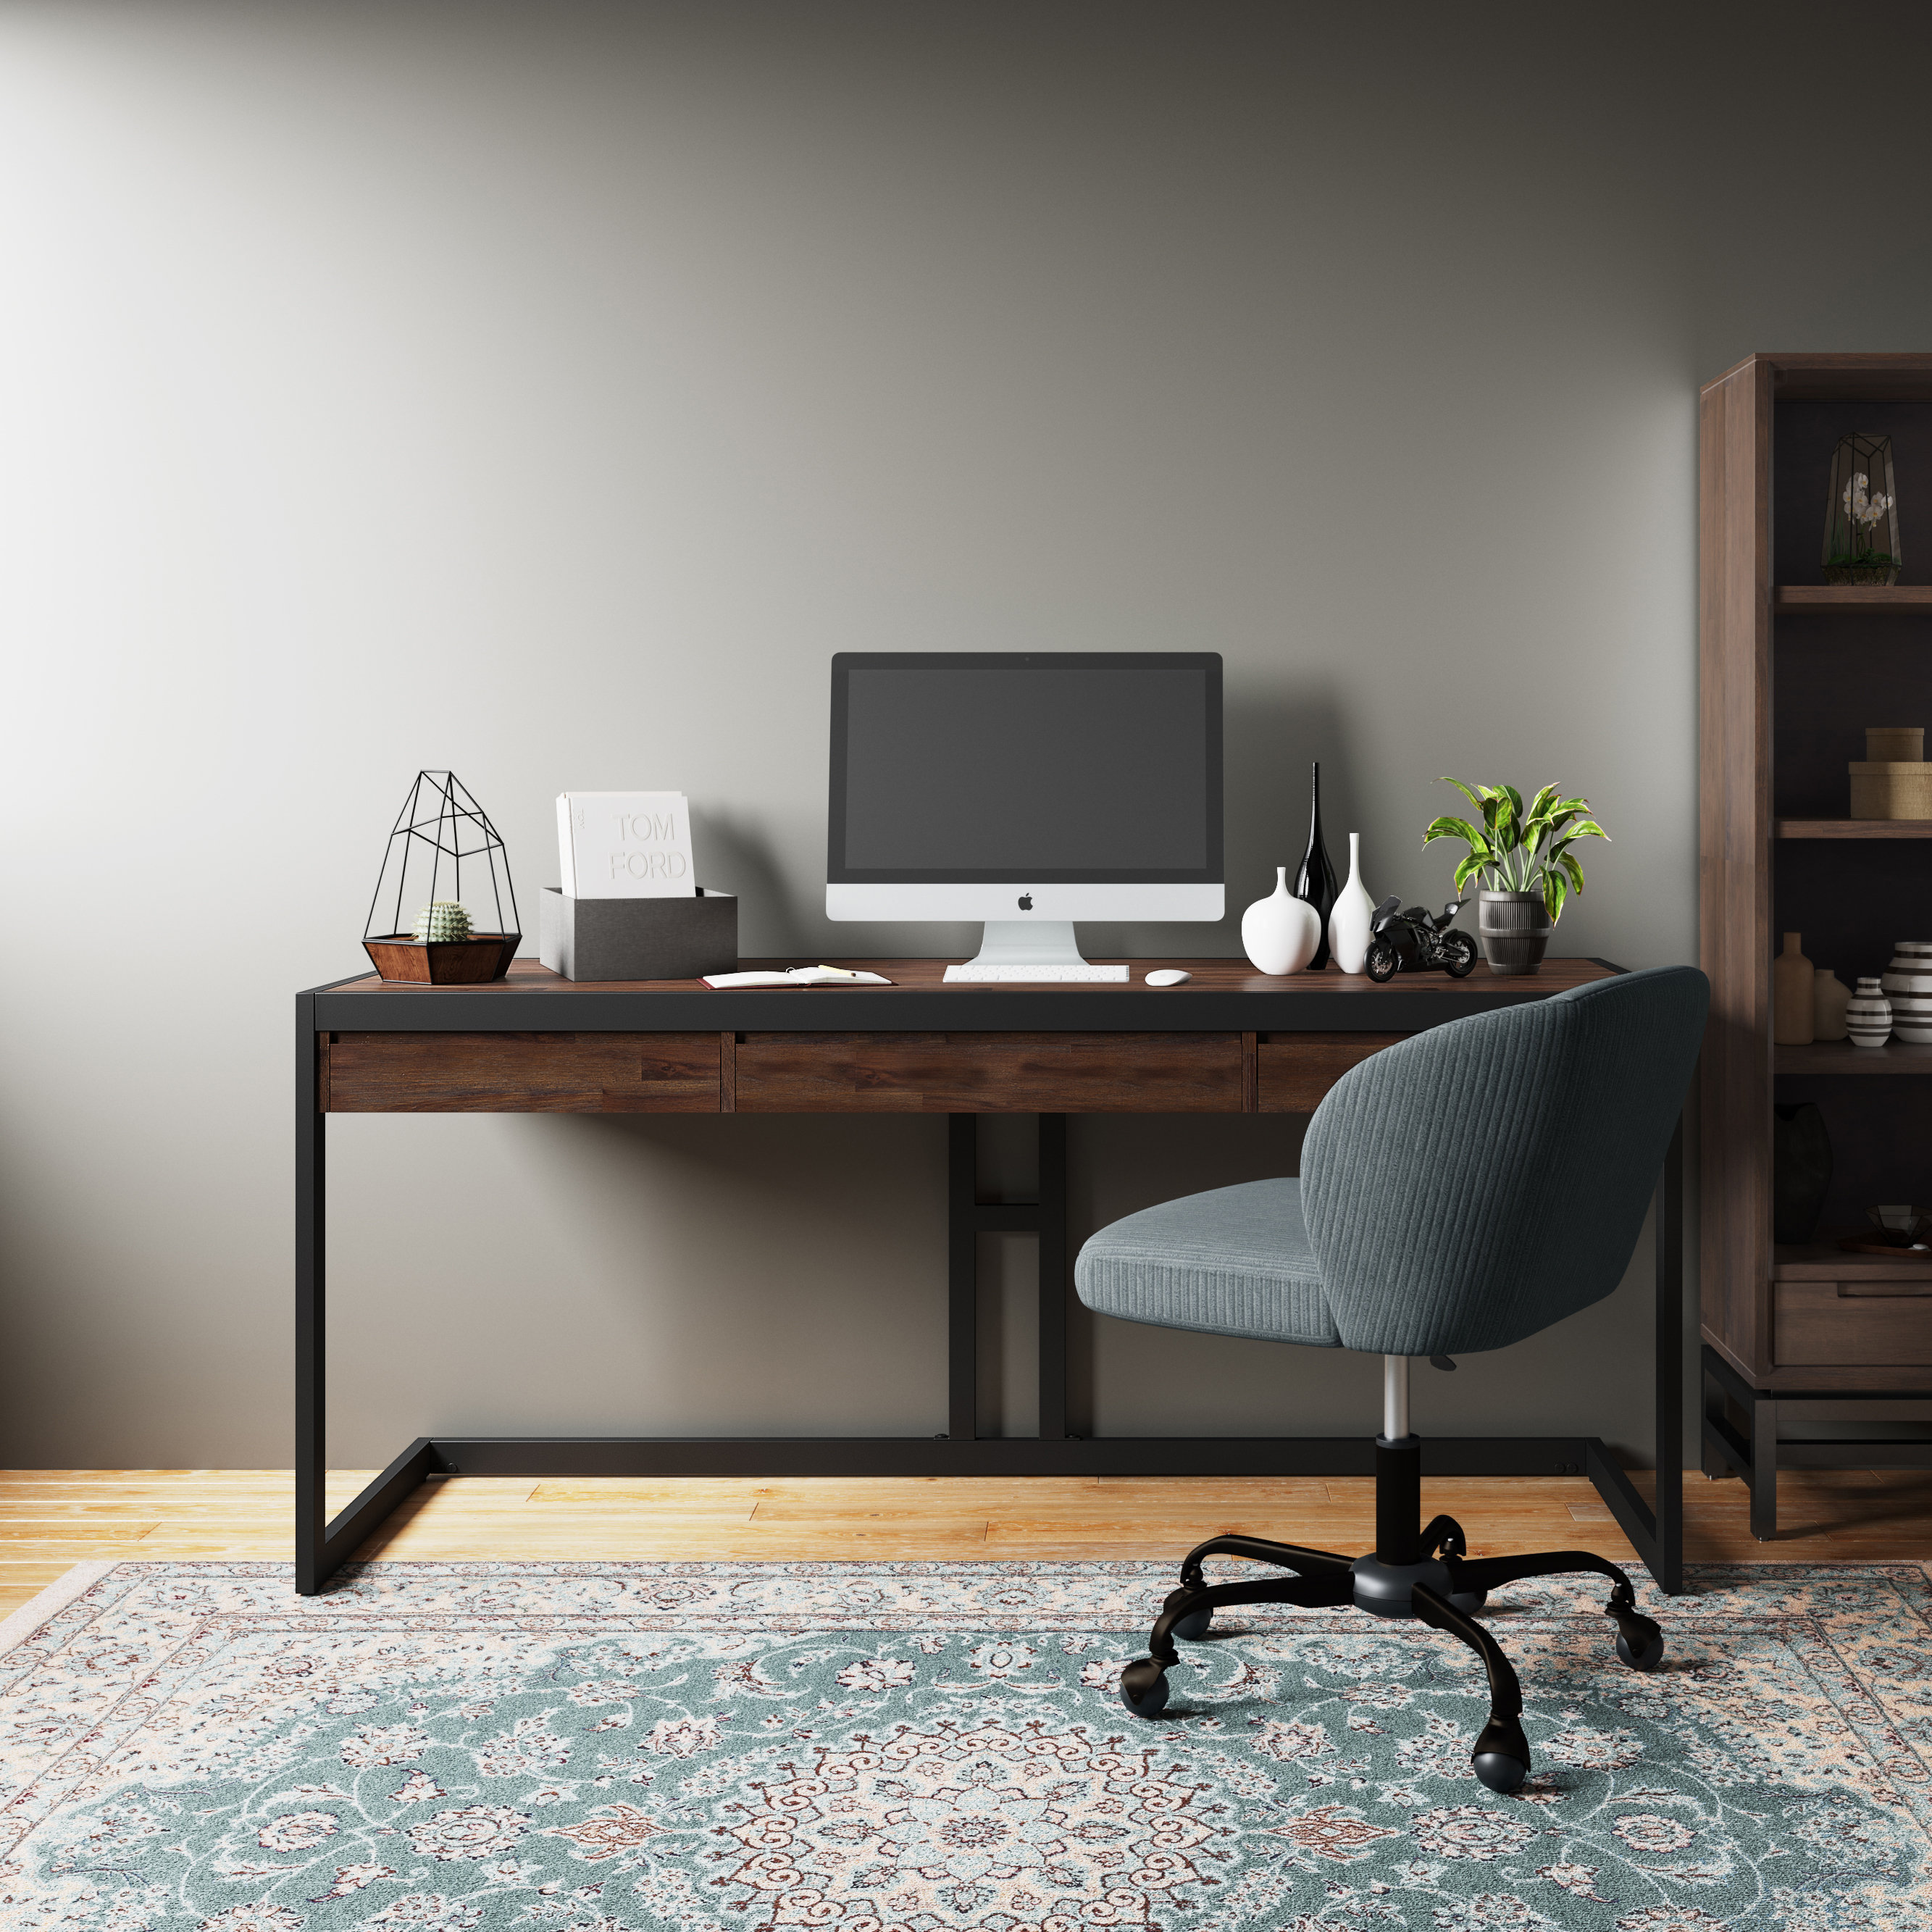 Leather Desk Set - Leather Organizer Desk Set - Walnut Wood Desk Set -  Office Product - Desk Accessories Set - 11 PCS (Gray) 